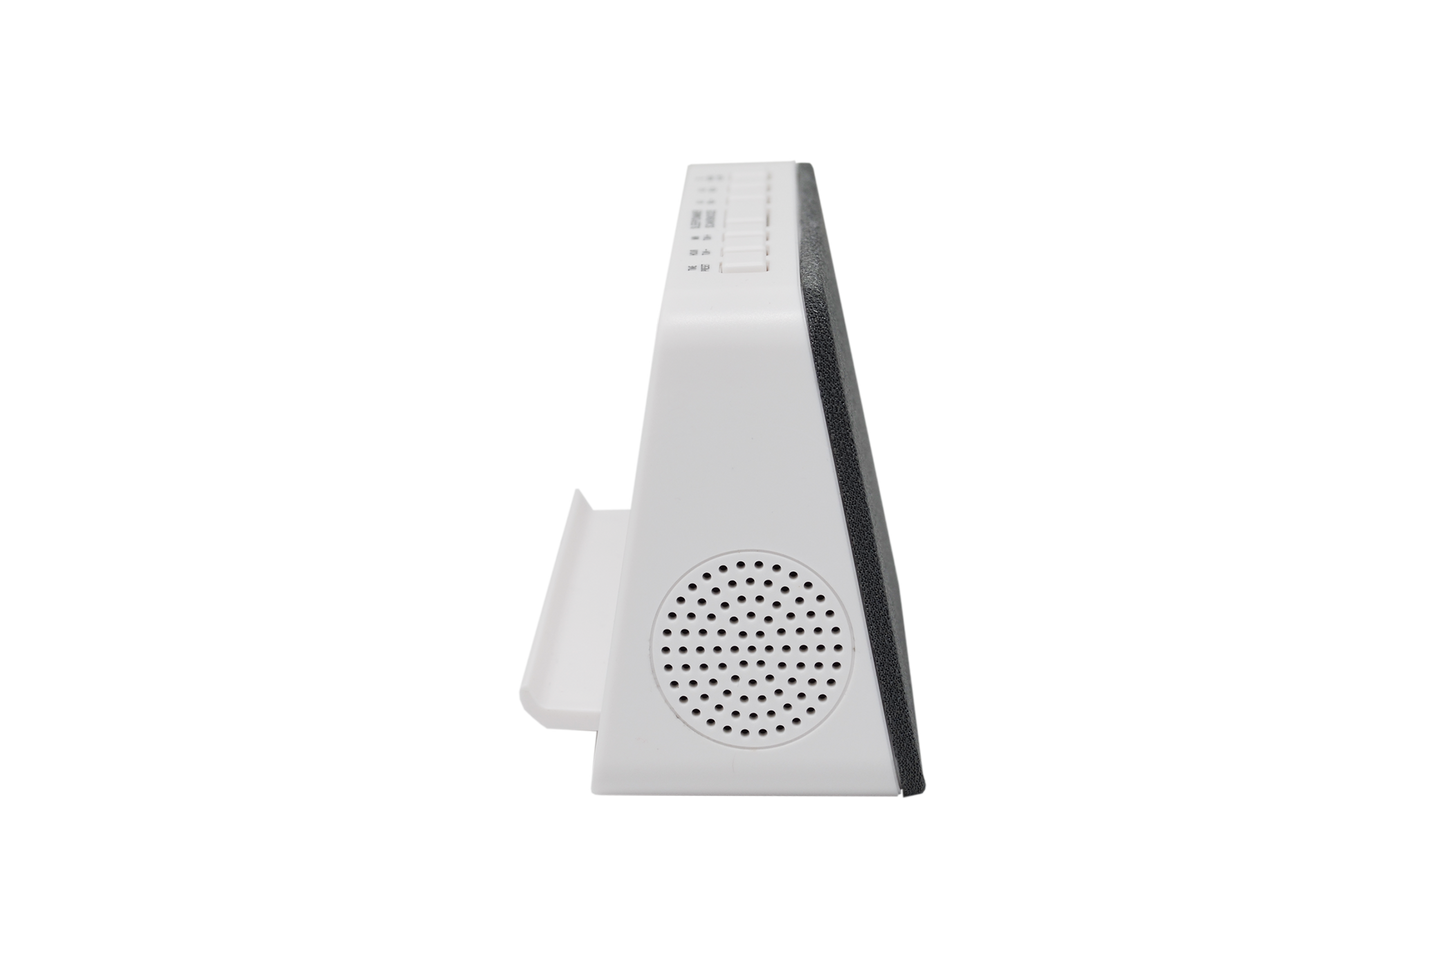 AIC - Radioreloj Despertador FM con Base de Carga inalámbrica QI para móviles, 10 Emisoras, Función de Alarma dual, Puerto de Carga USB, Atenuador "dimmer" de 3 pasos. Mod. WM3020i